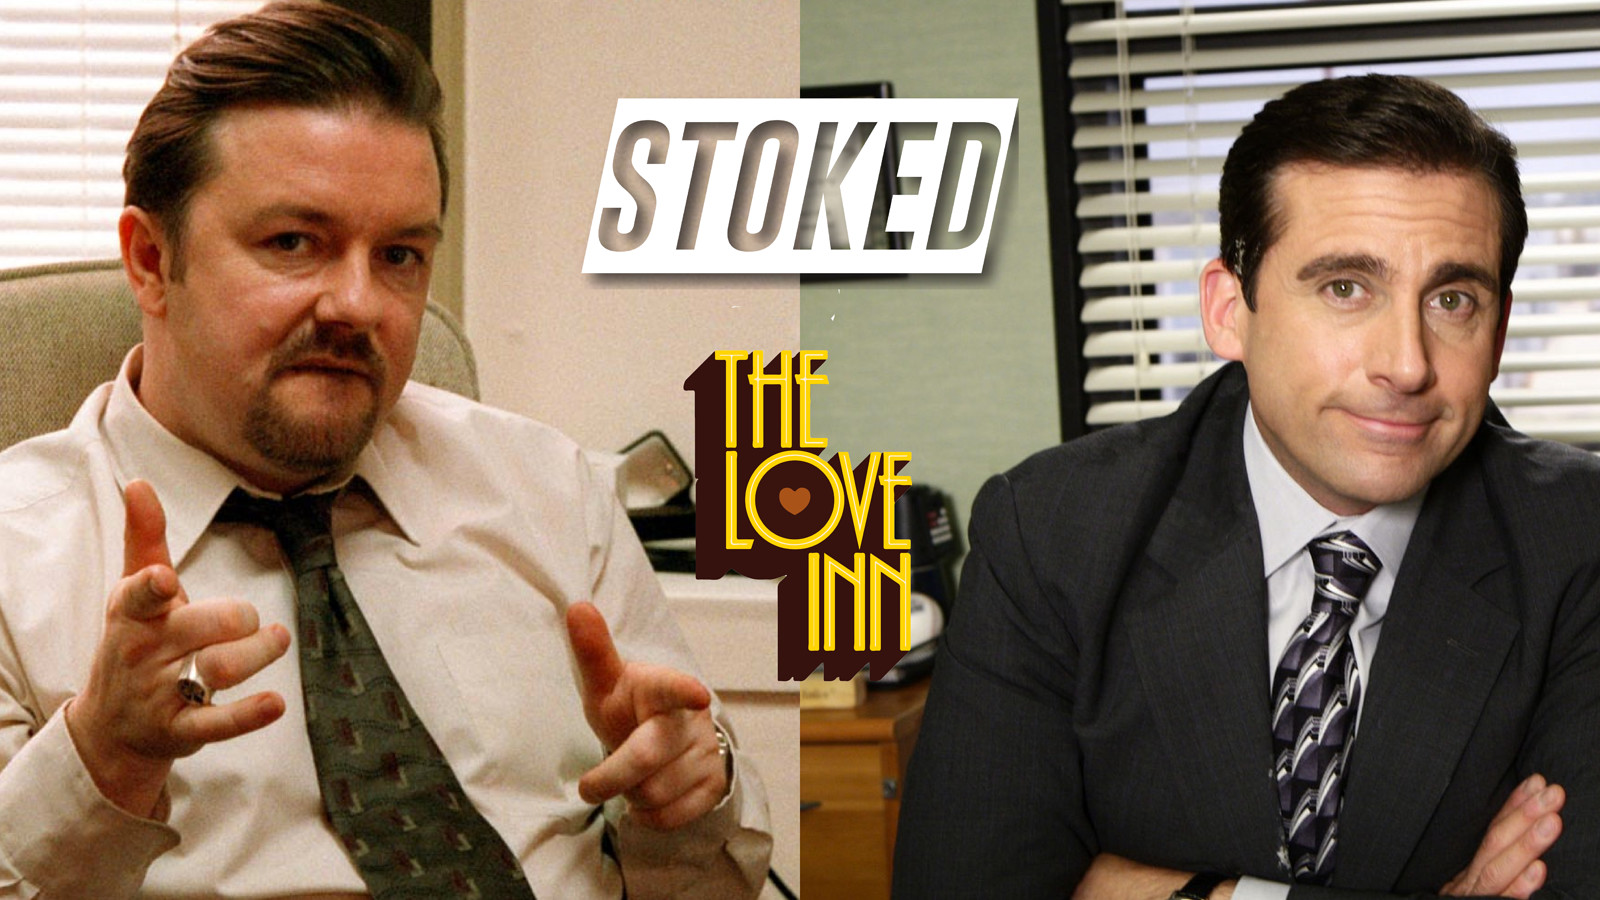 Stoked: The Office UK vs US at The Love Inn